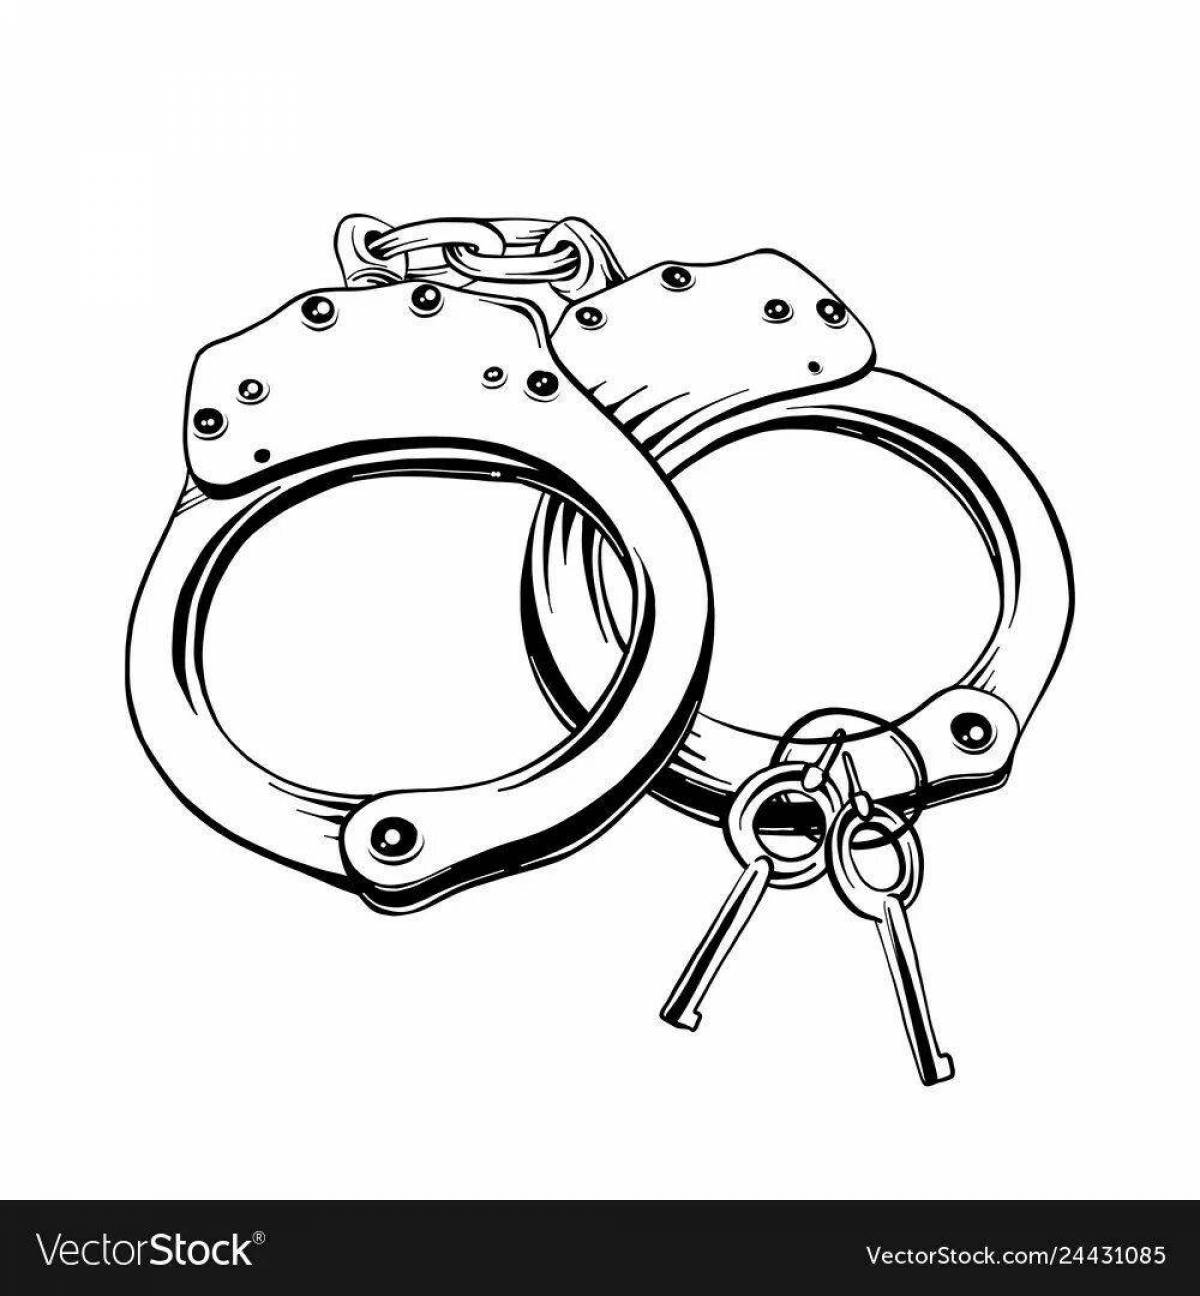 Handcuffs fun coloring book